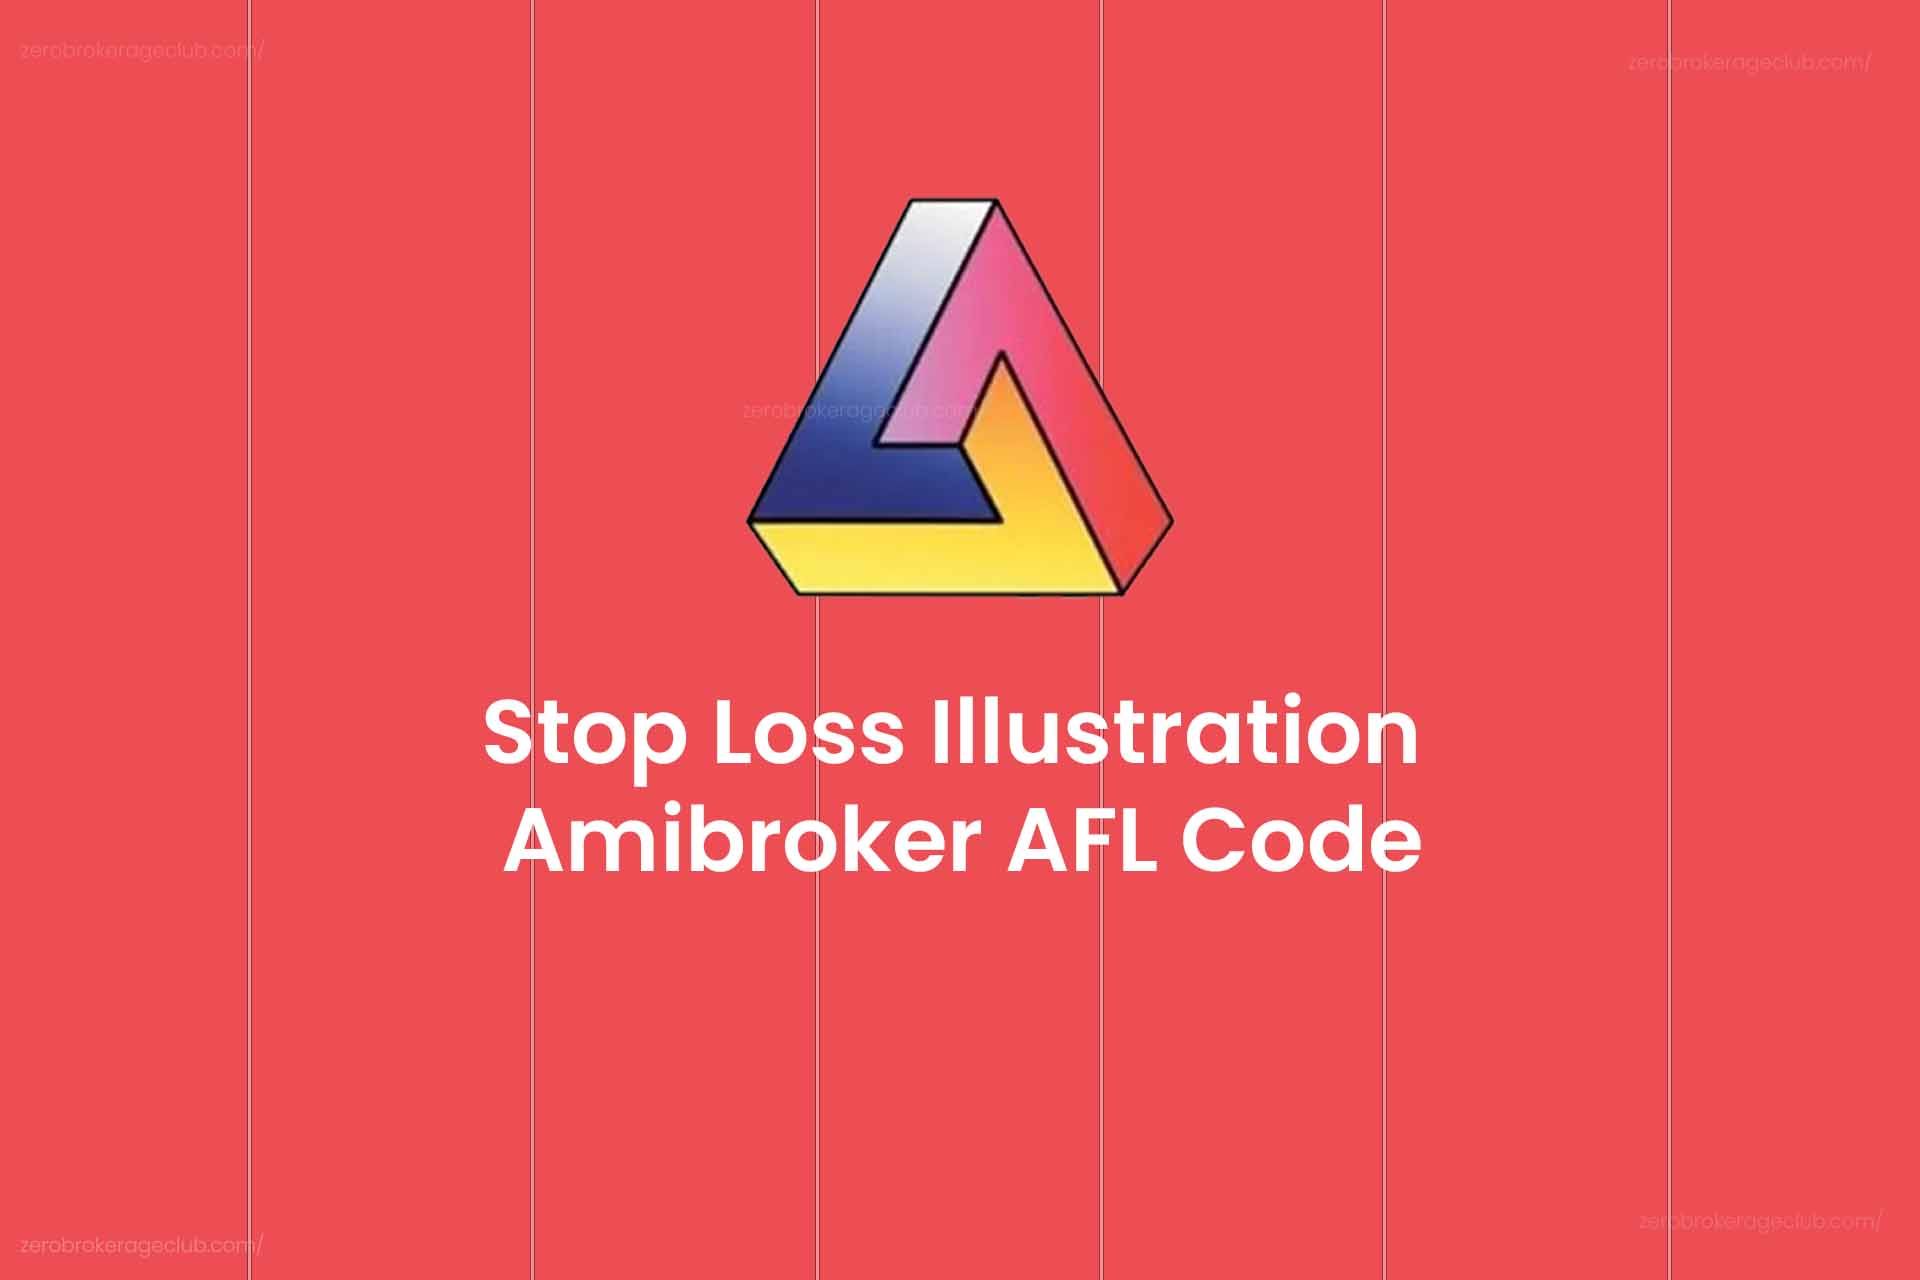 Stop Loss Illustration Amibroker AFL Code